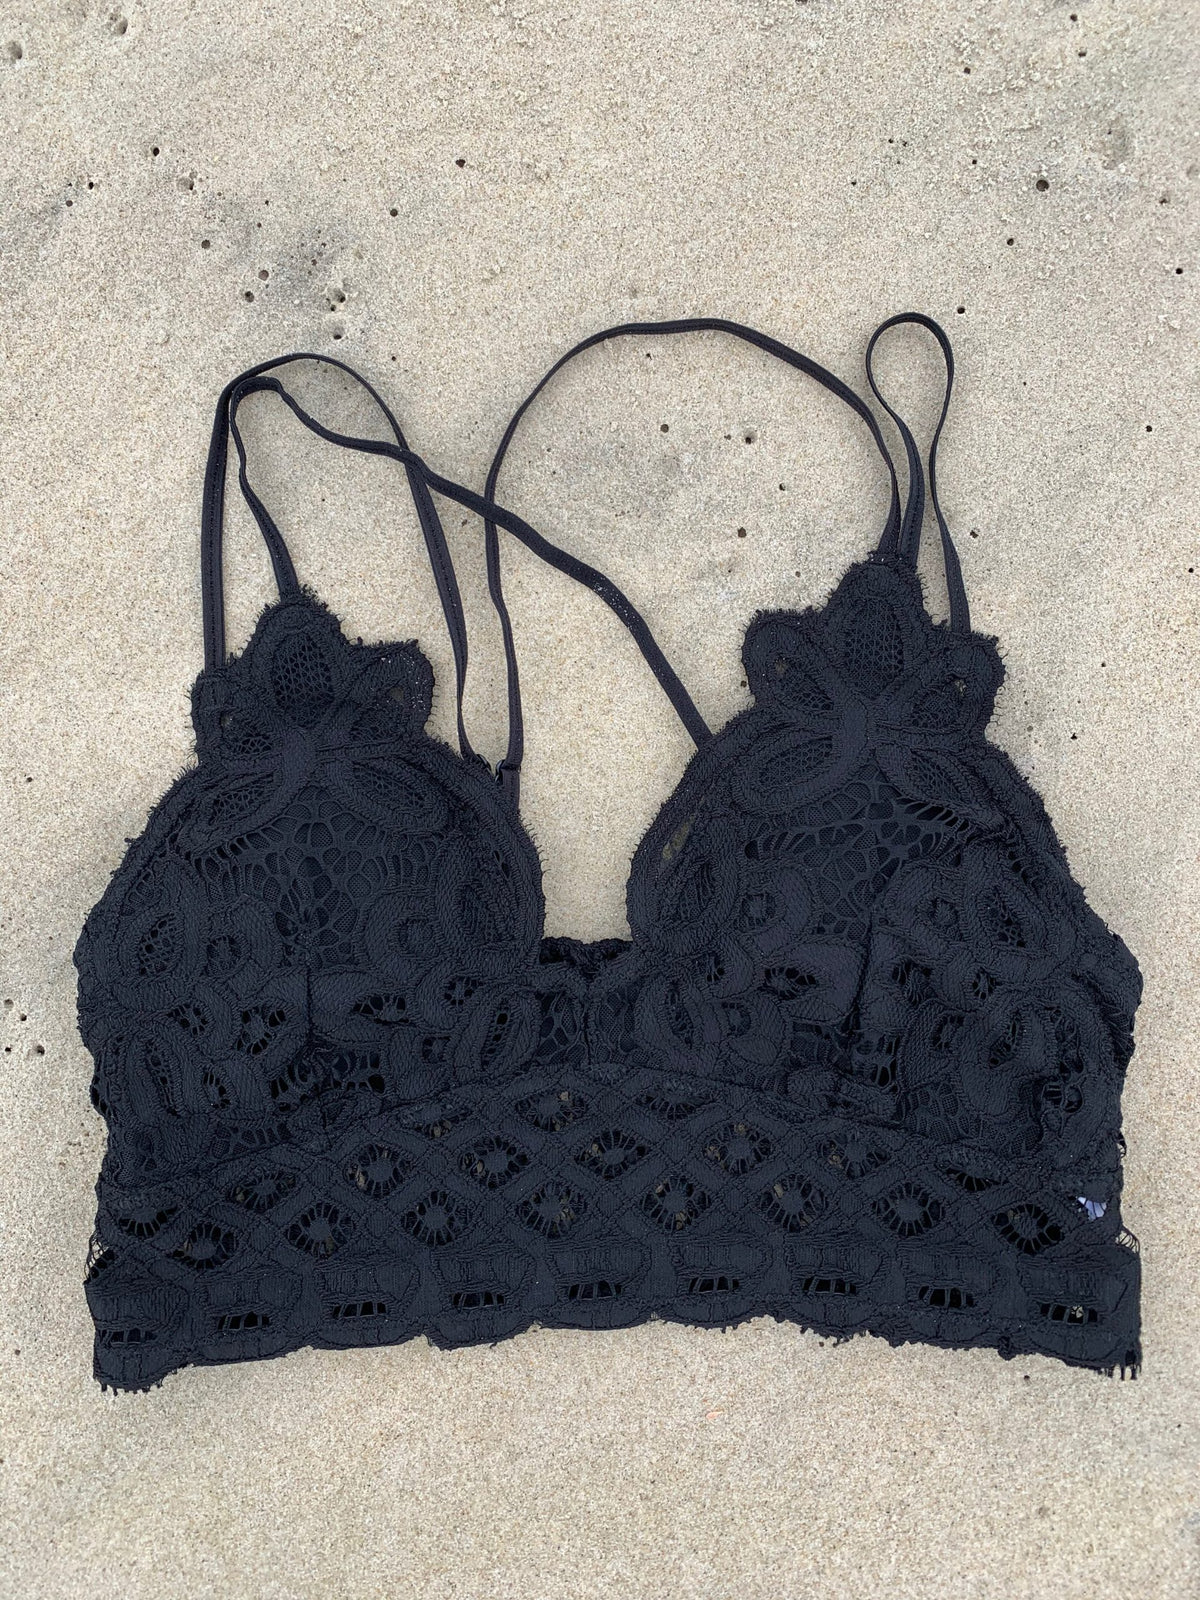 Crochet Lace Bralette - Black